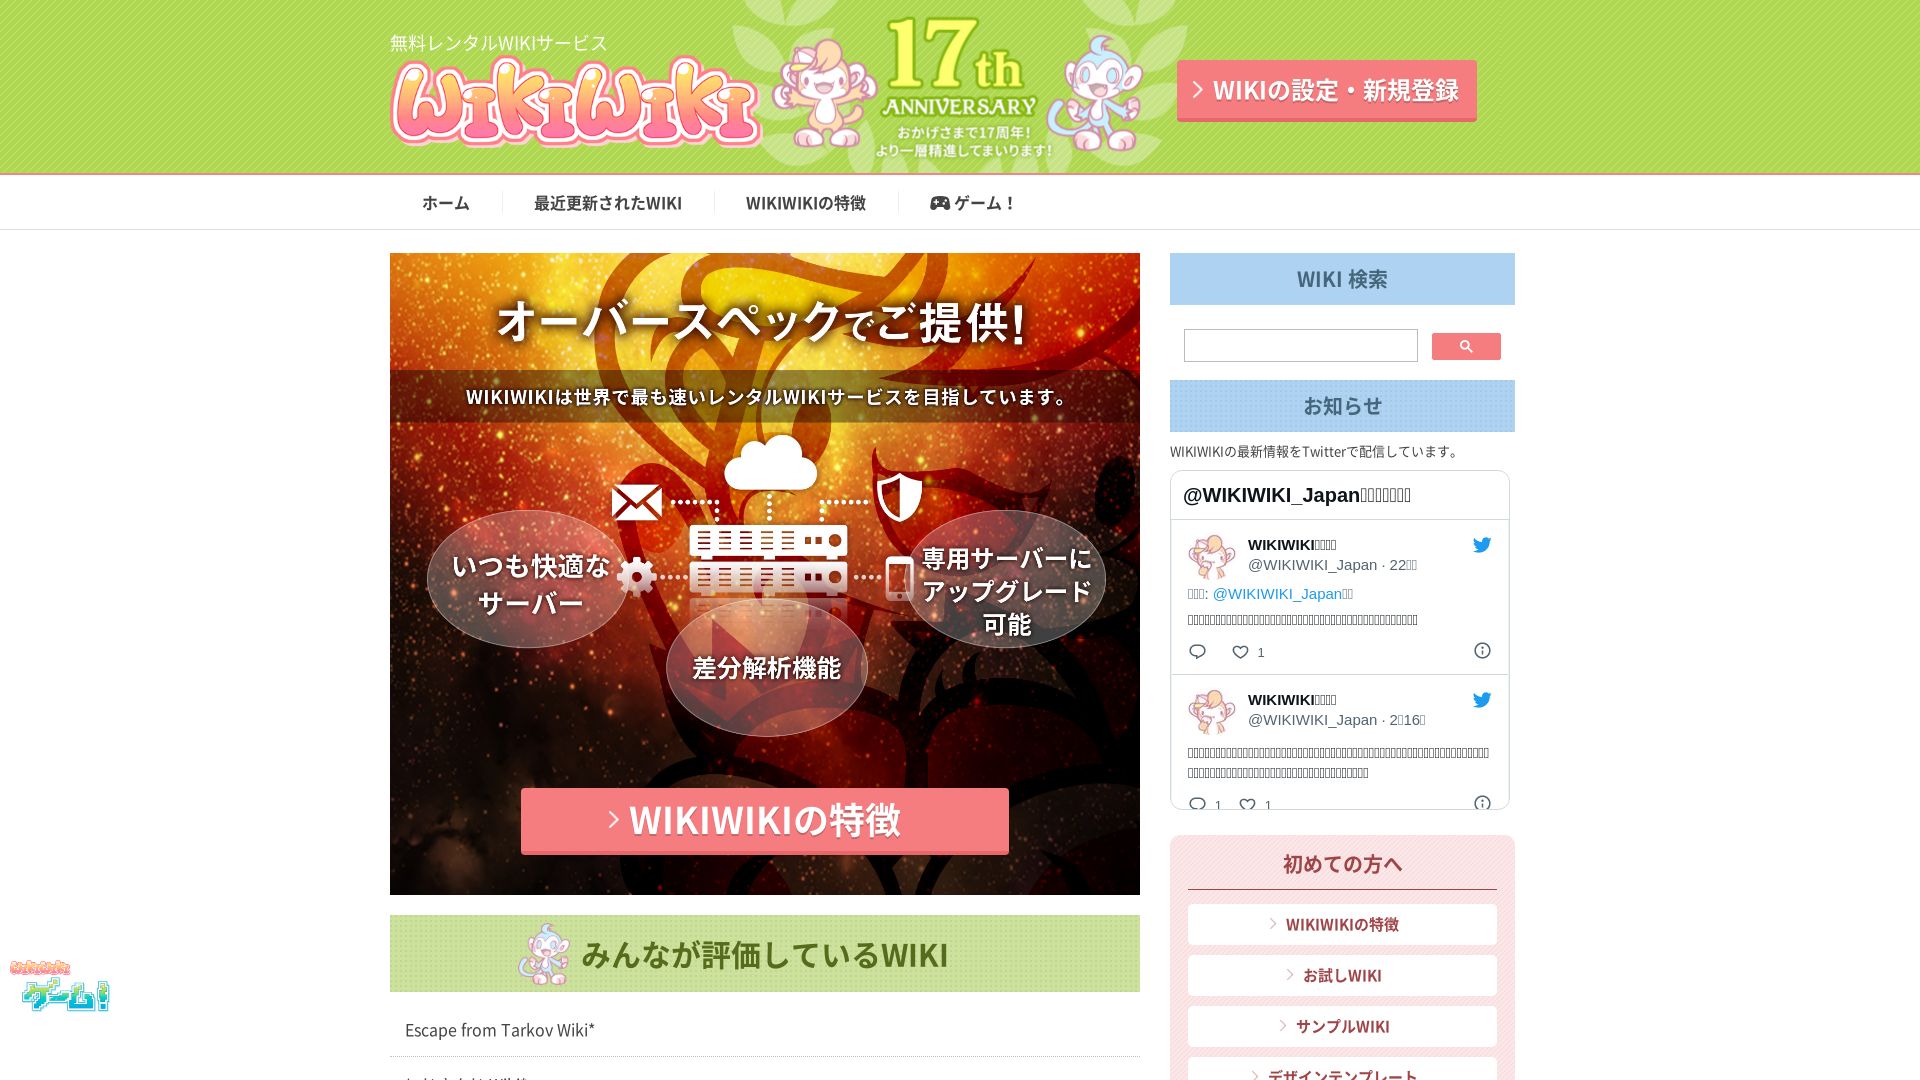 Estado web wikiwiki.jp está   ONLINE